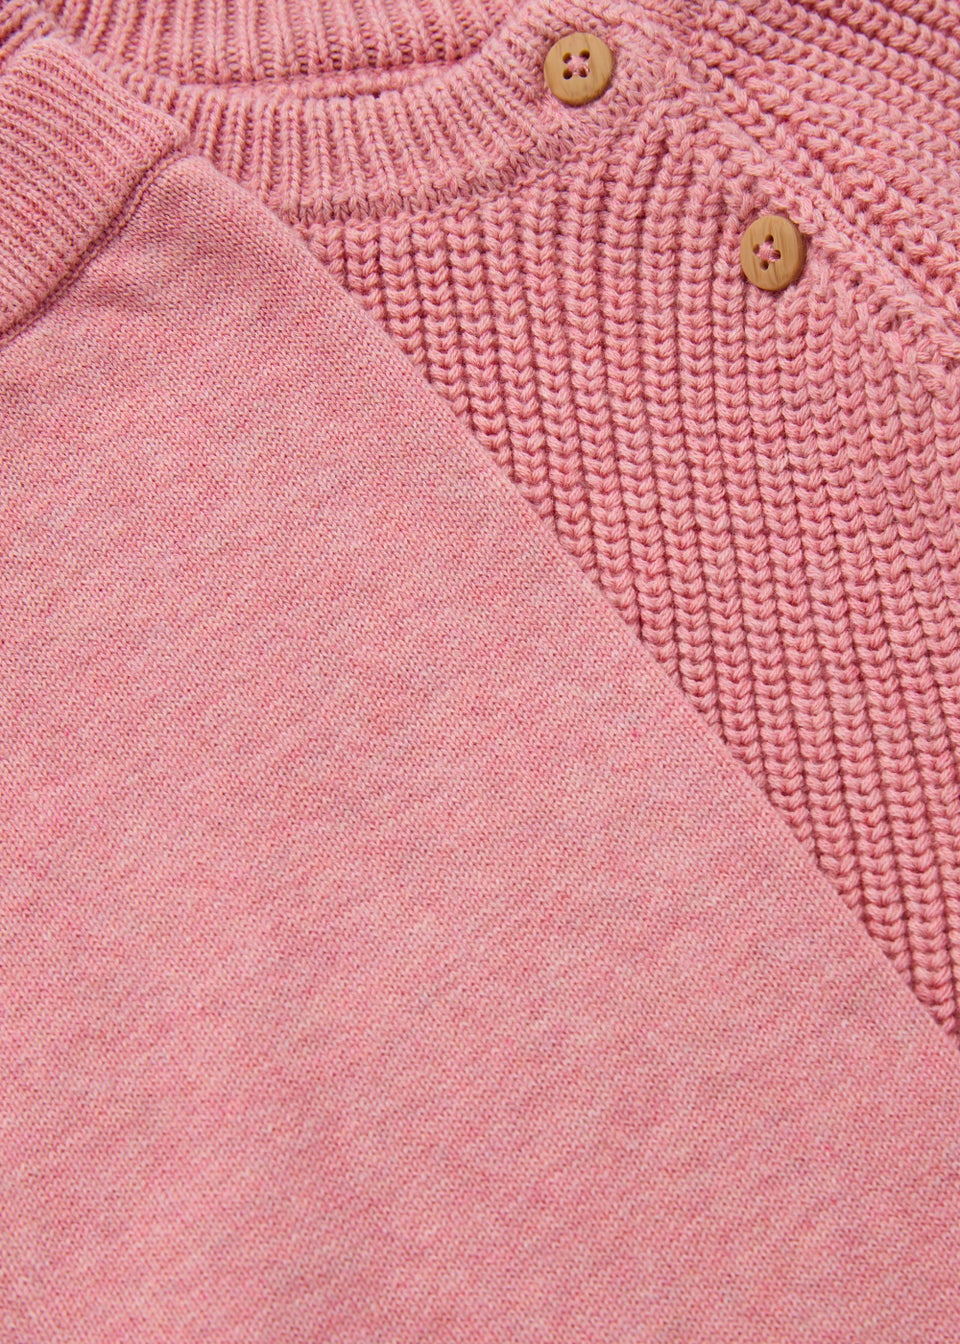 Sweatshirt and Joggers - Pink melange - Kids